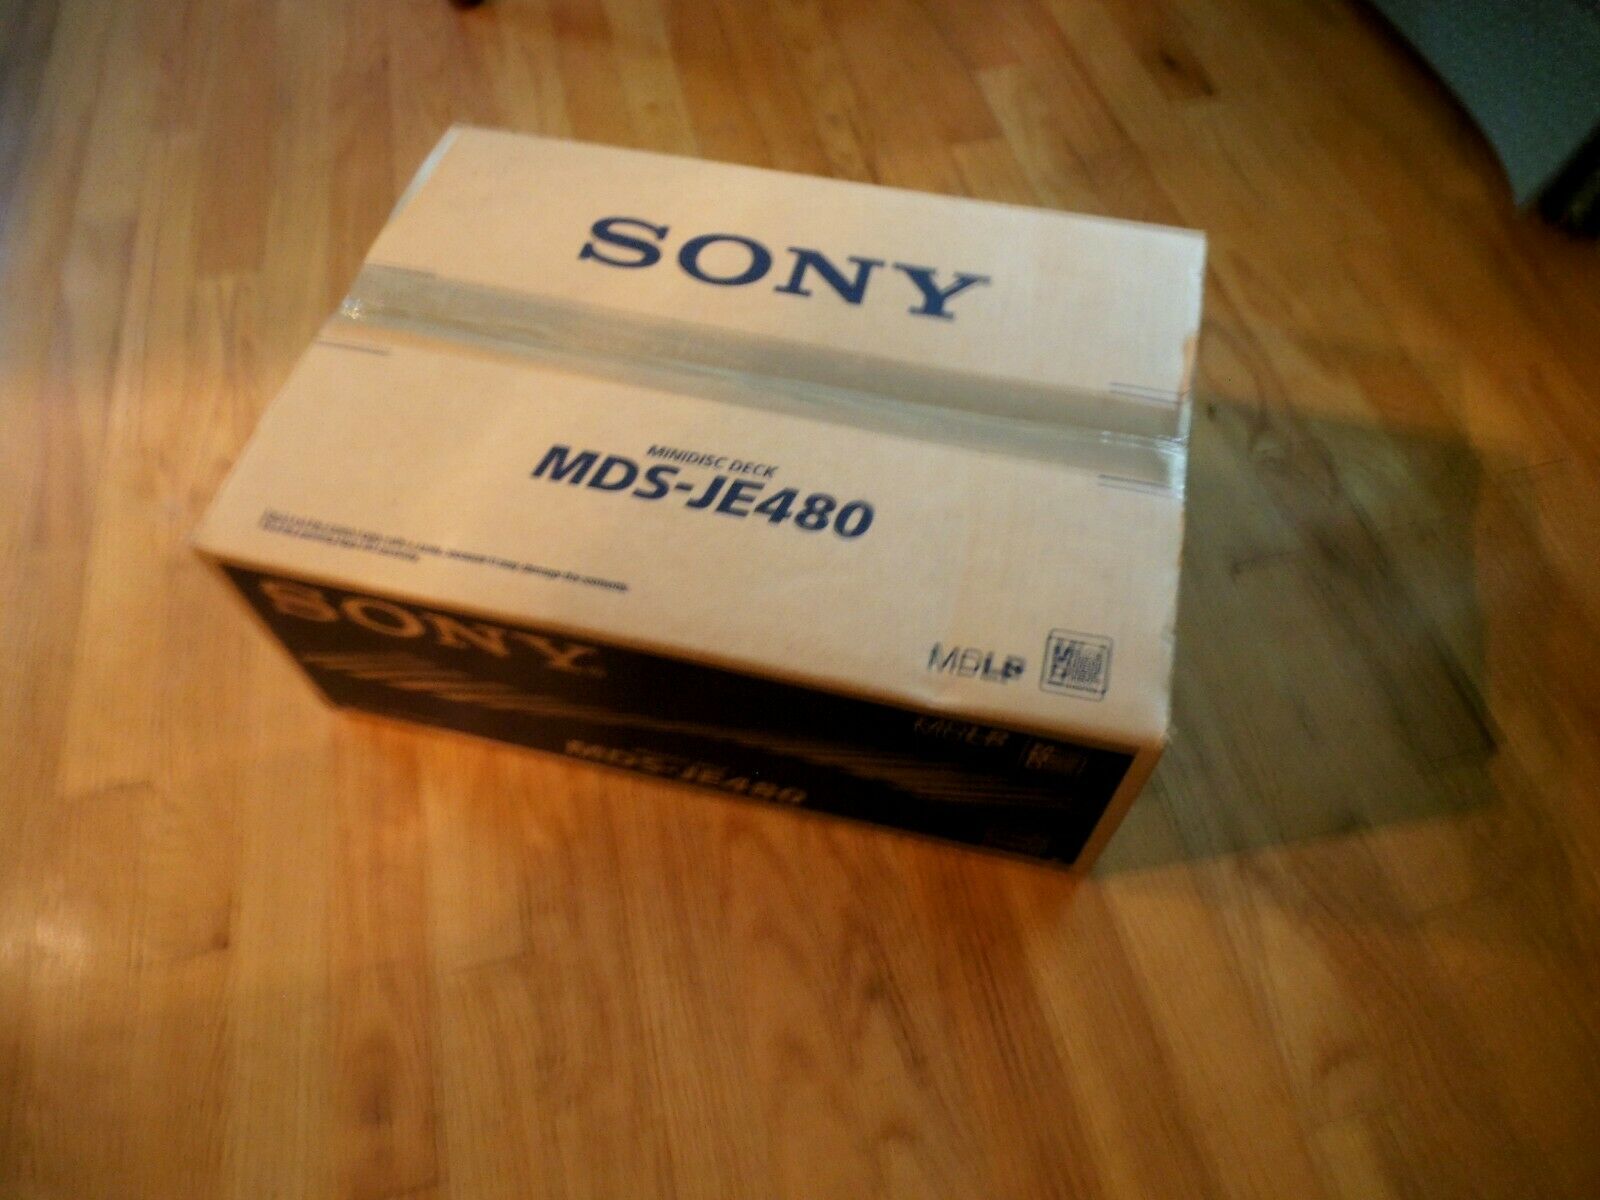 Sony Mds-je480 Mini Disk System Brandnew, Open Box For Photos Unused Price Drop!